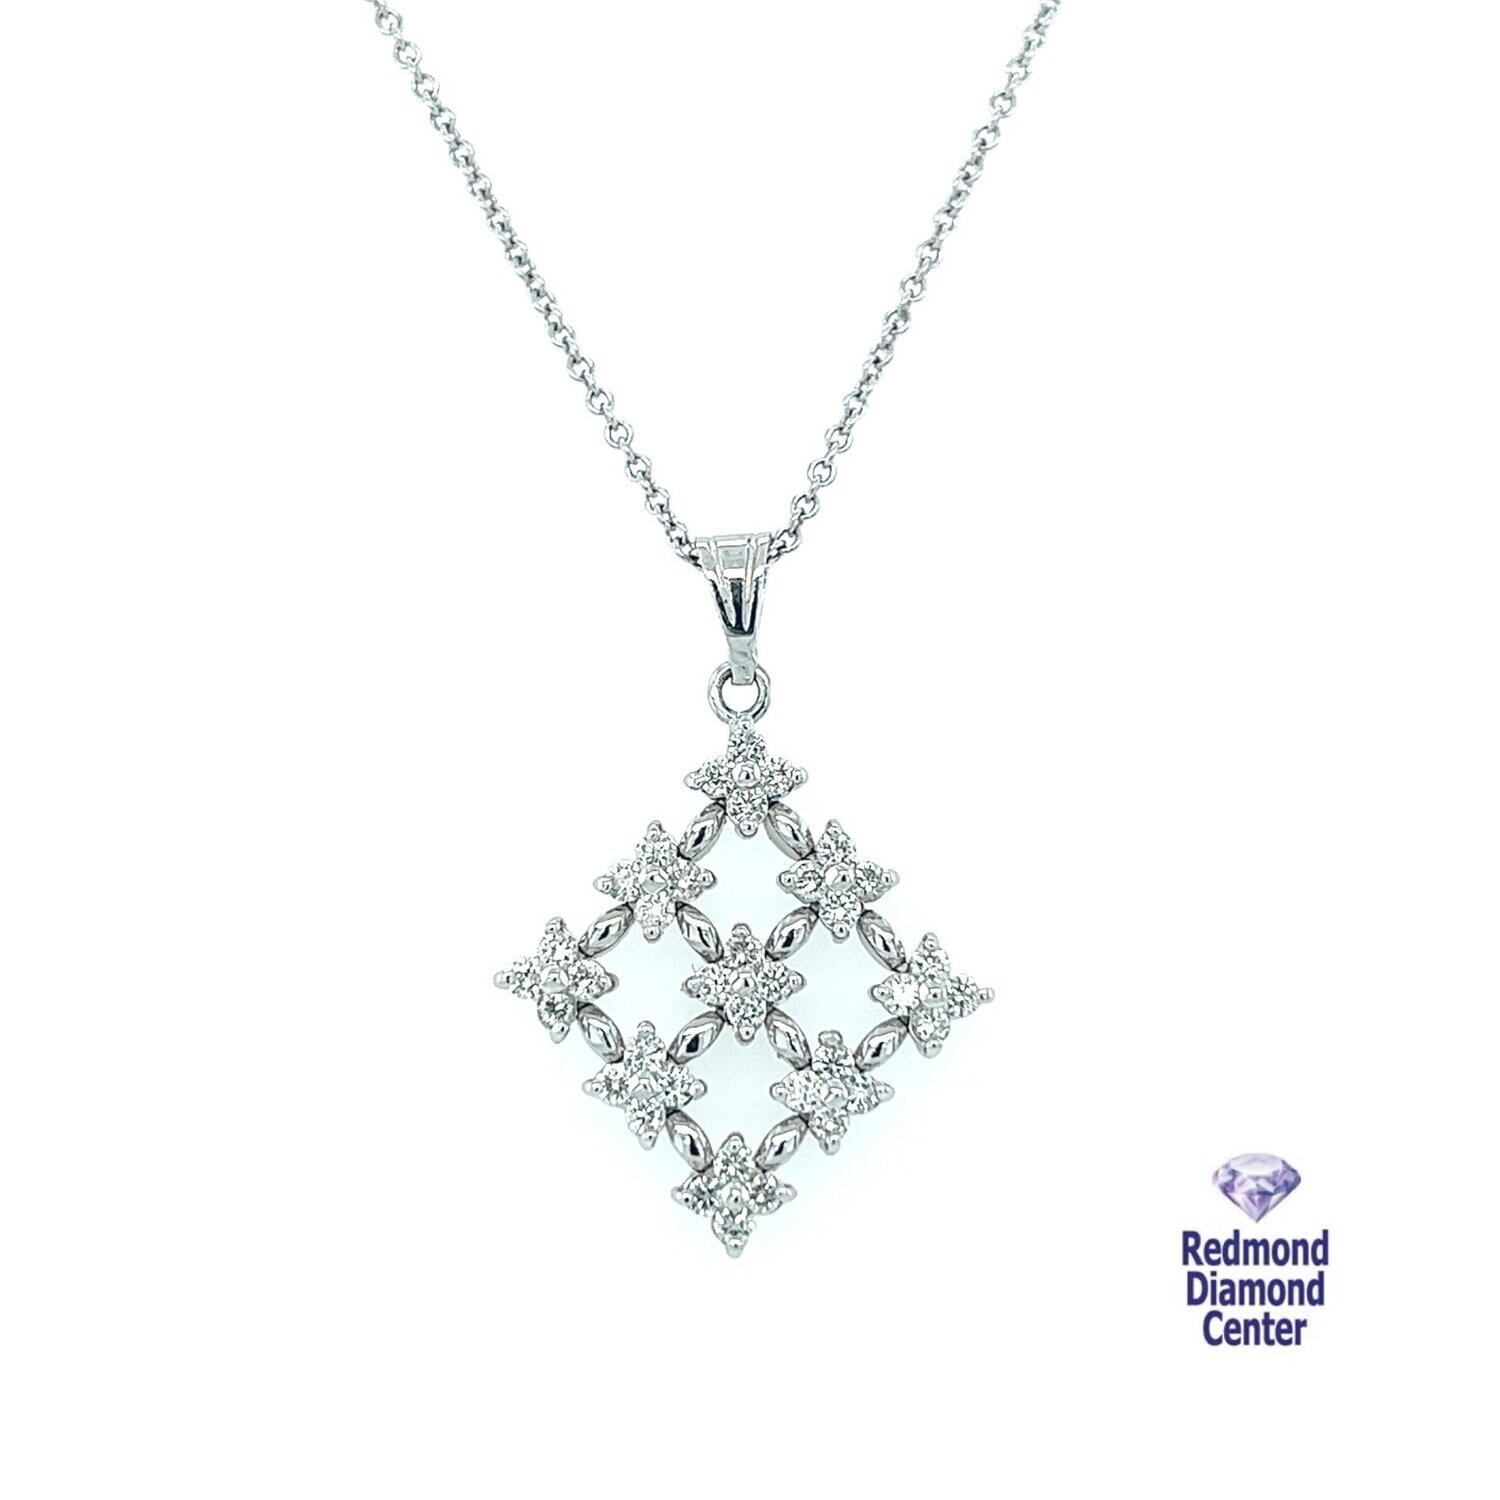 Round diamonds set in a flower necklace